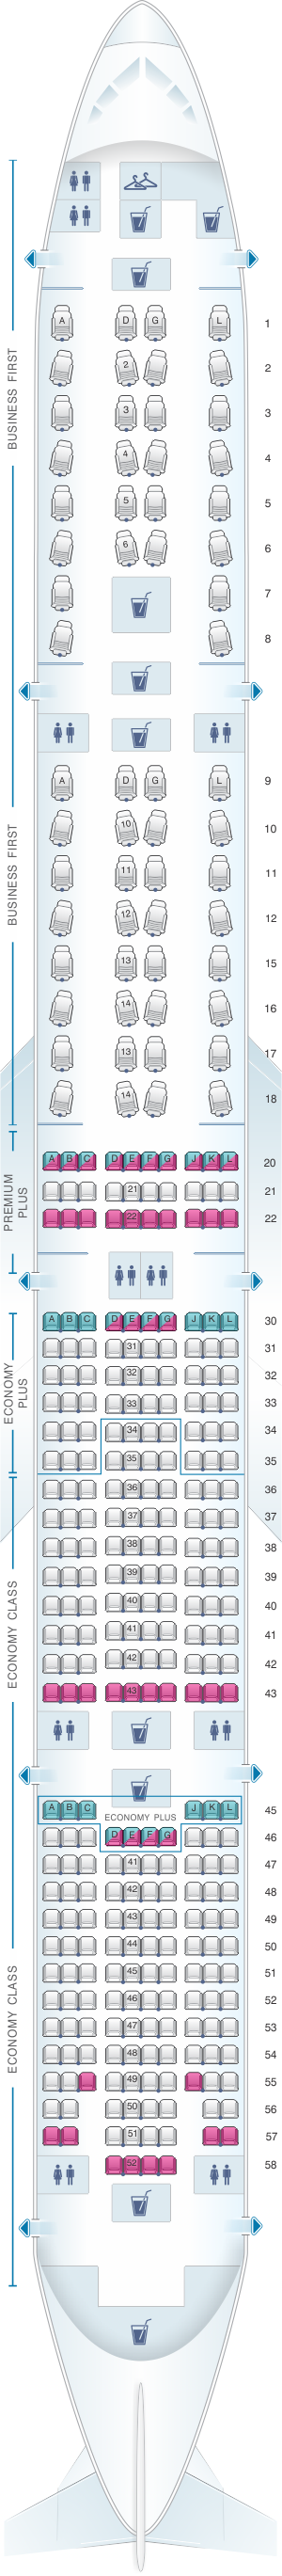 united 777 seat map